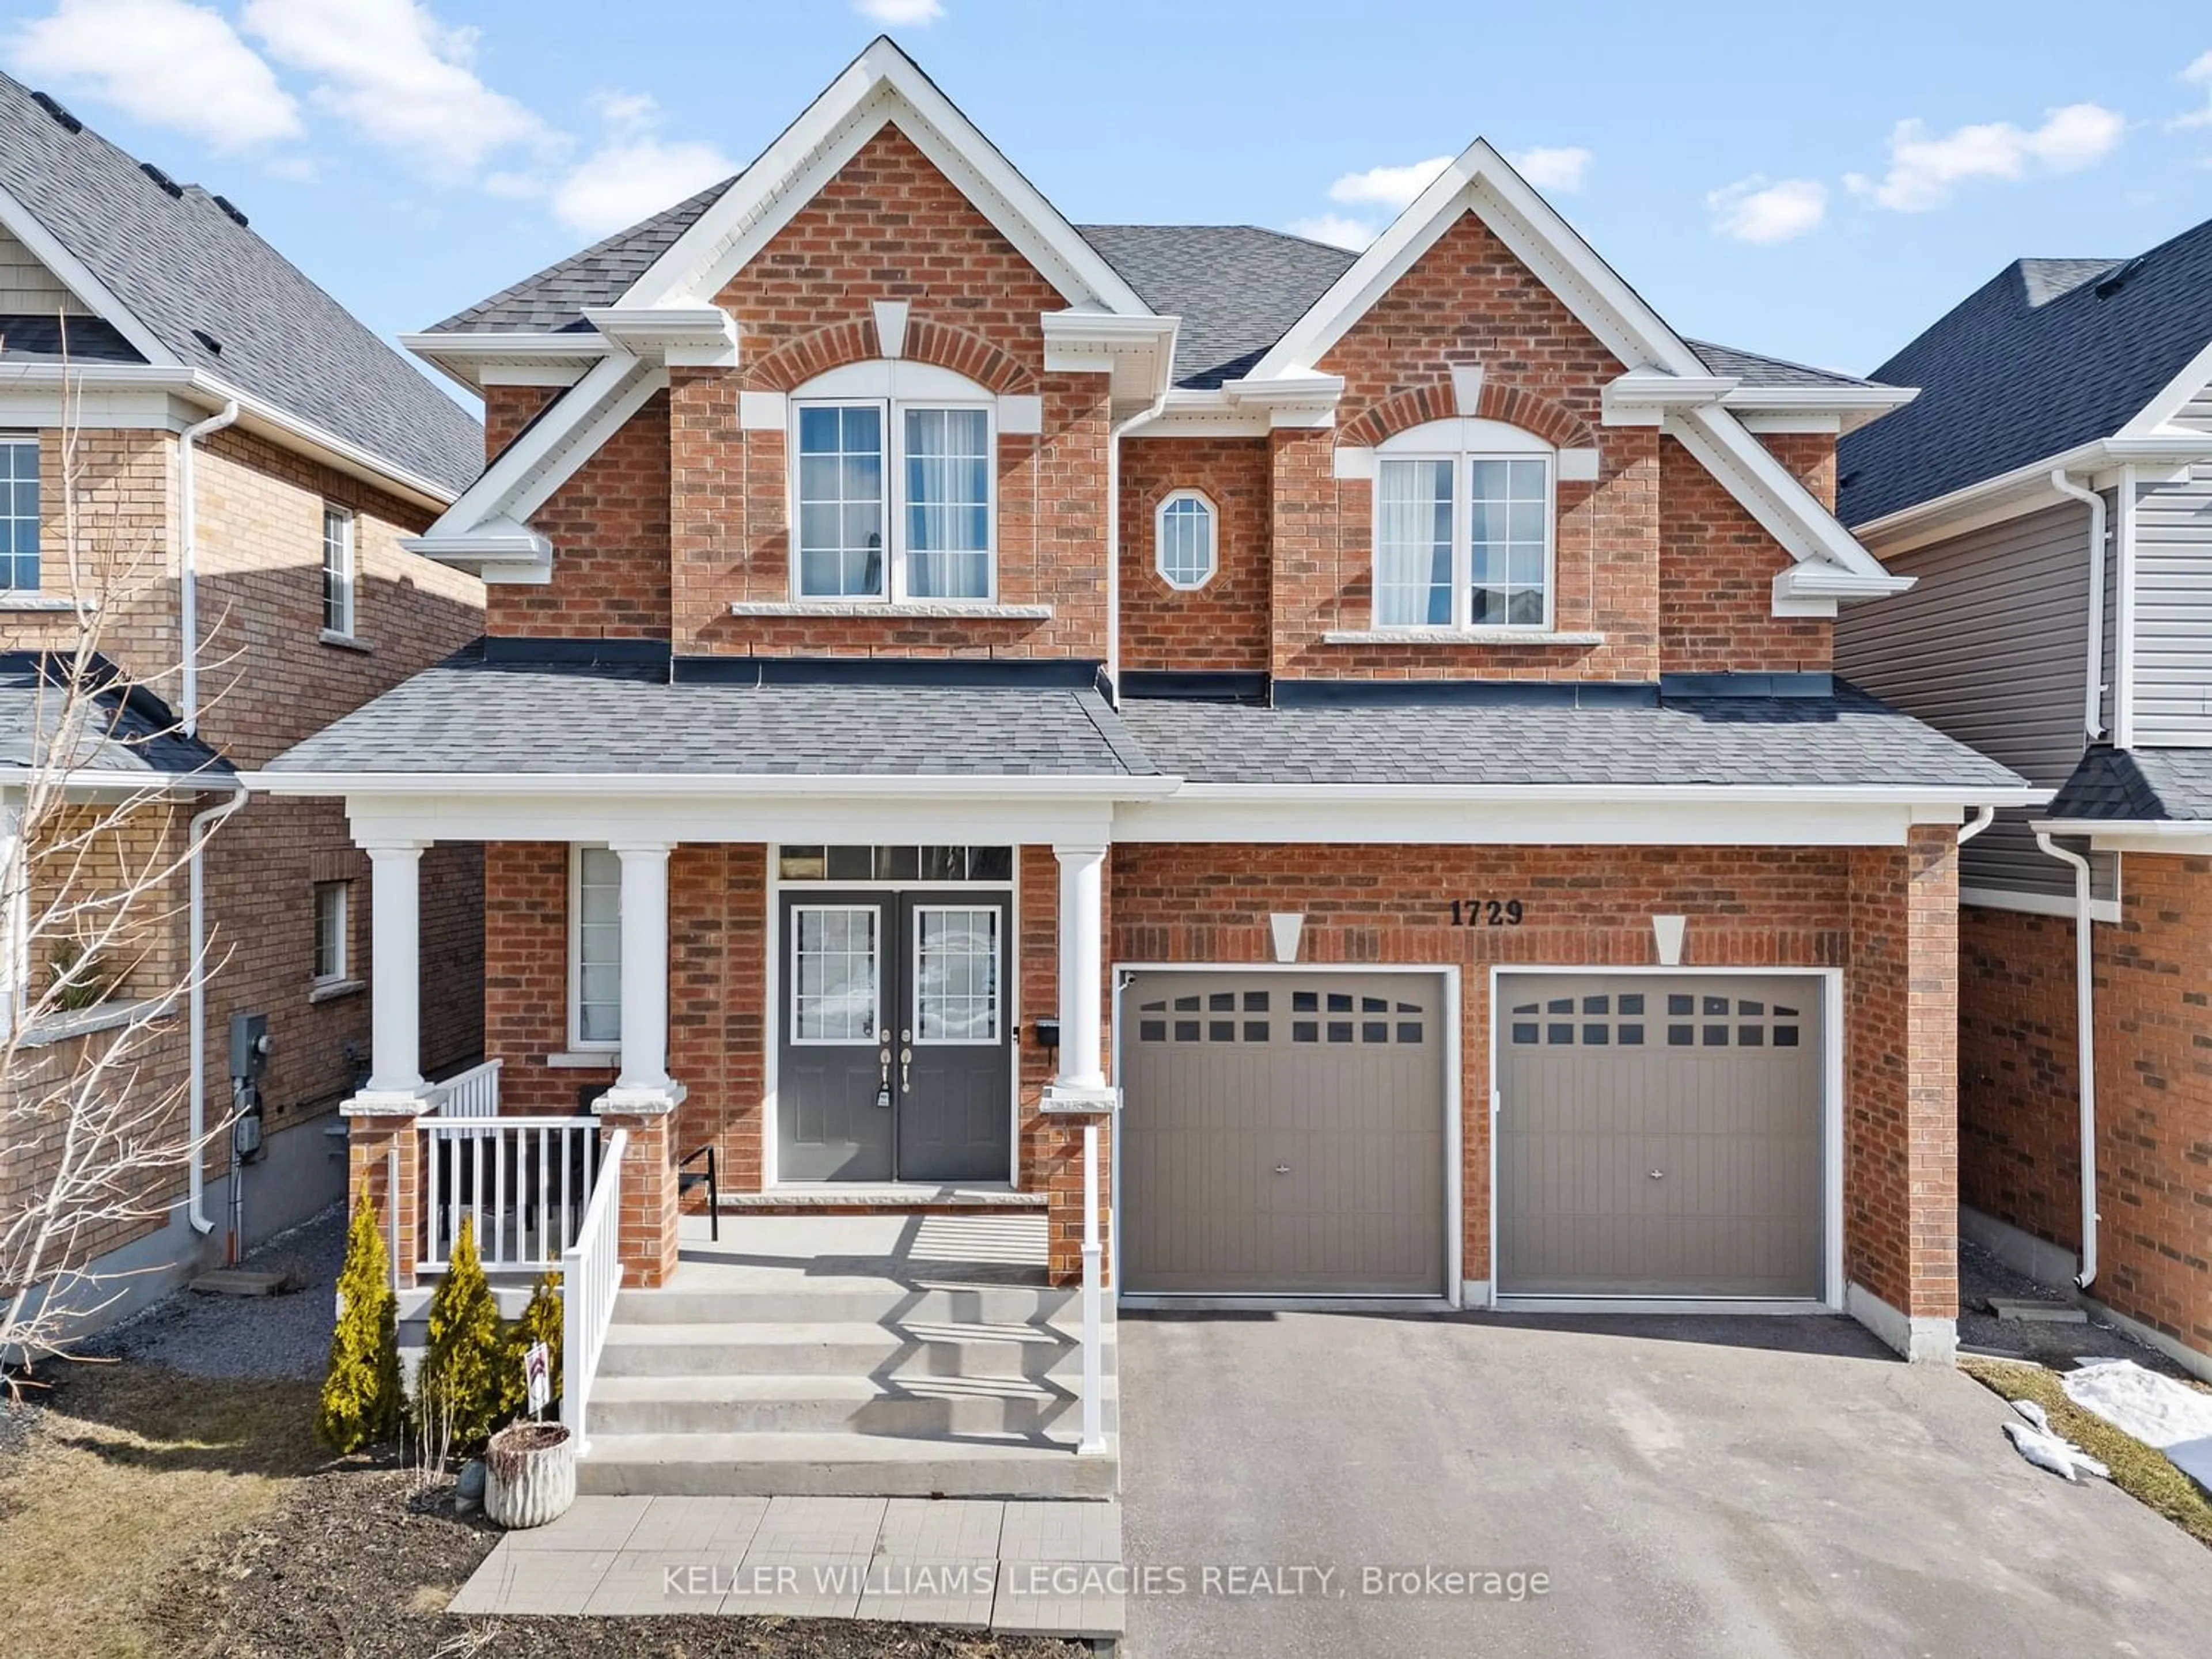 Home with brick exterior material for 1729 Frederick Mason Dr, Oshawa Ontario L1K 0X5